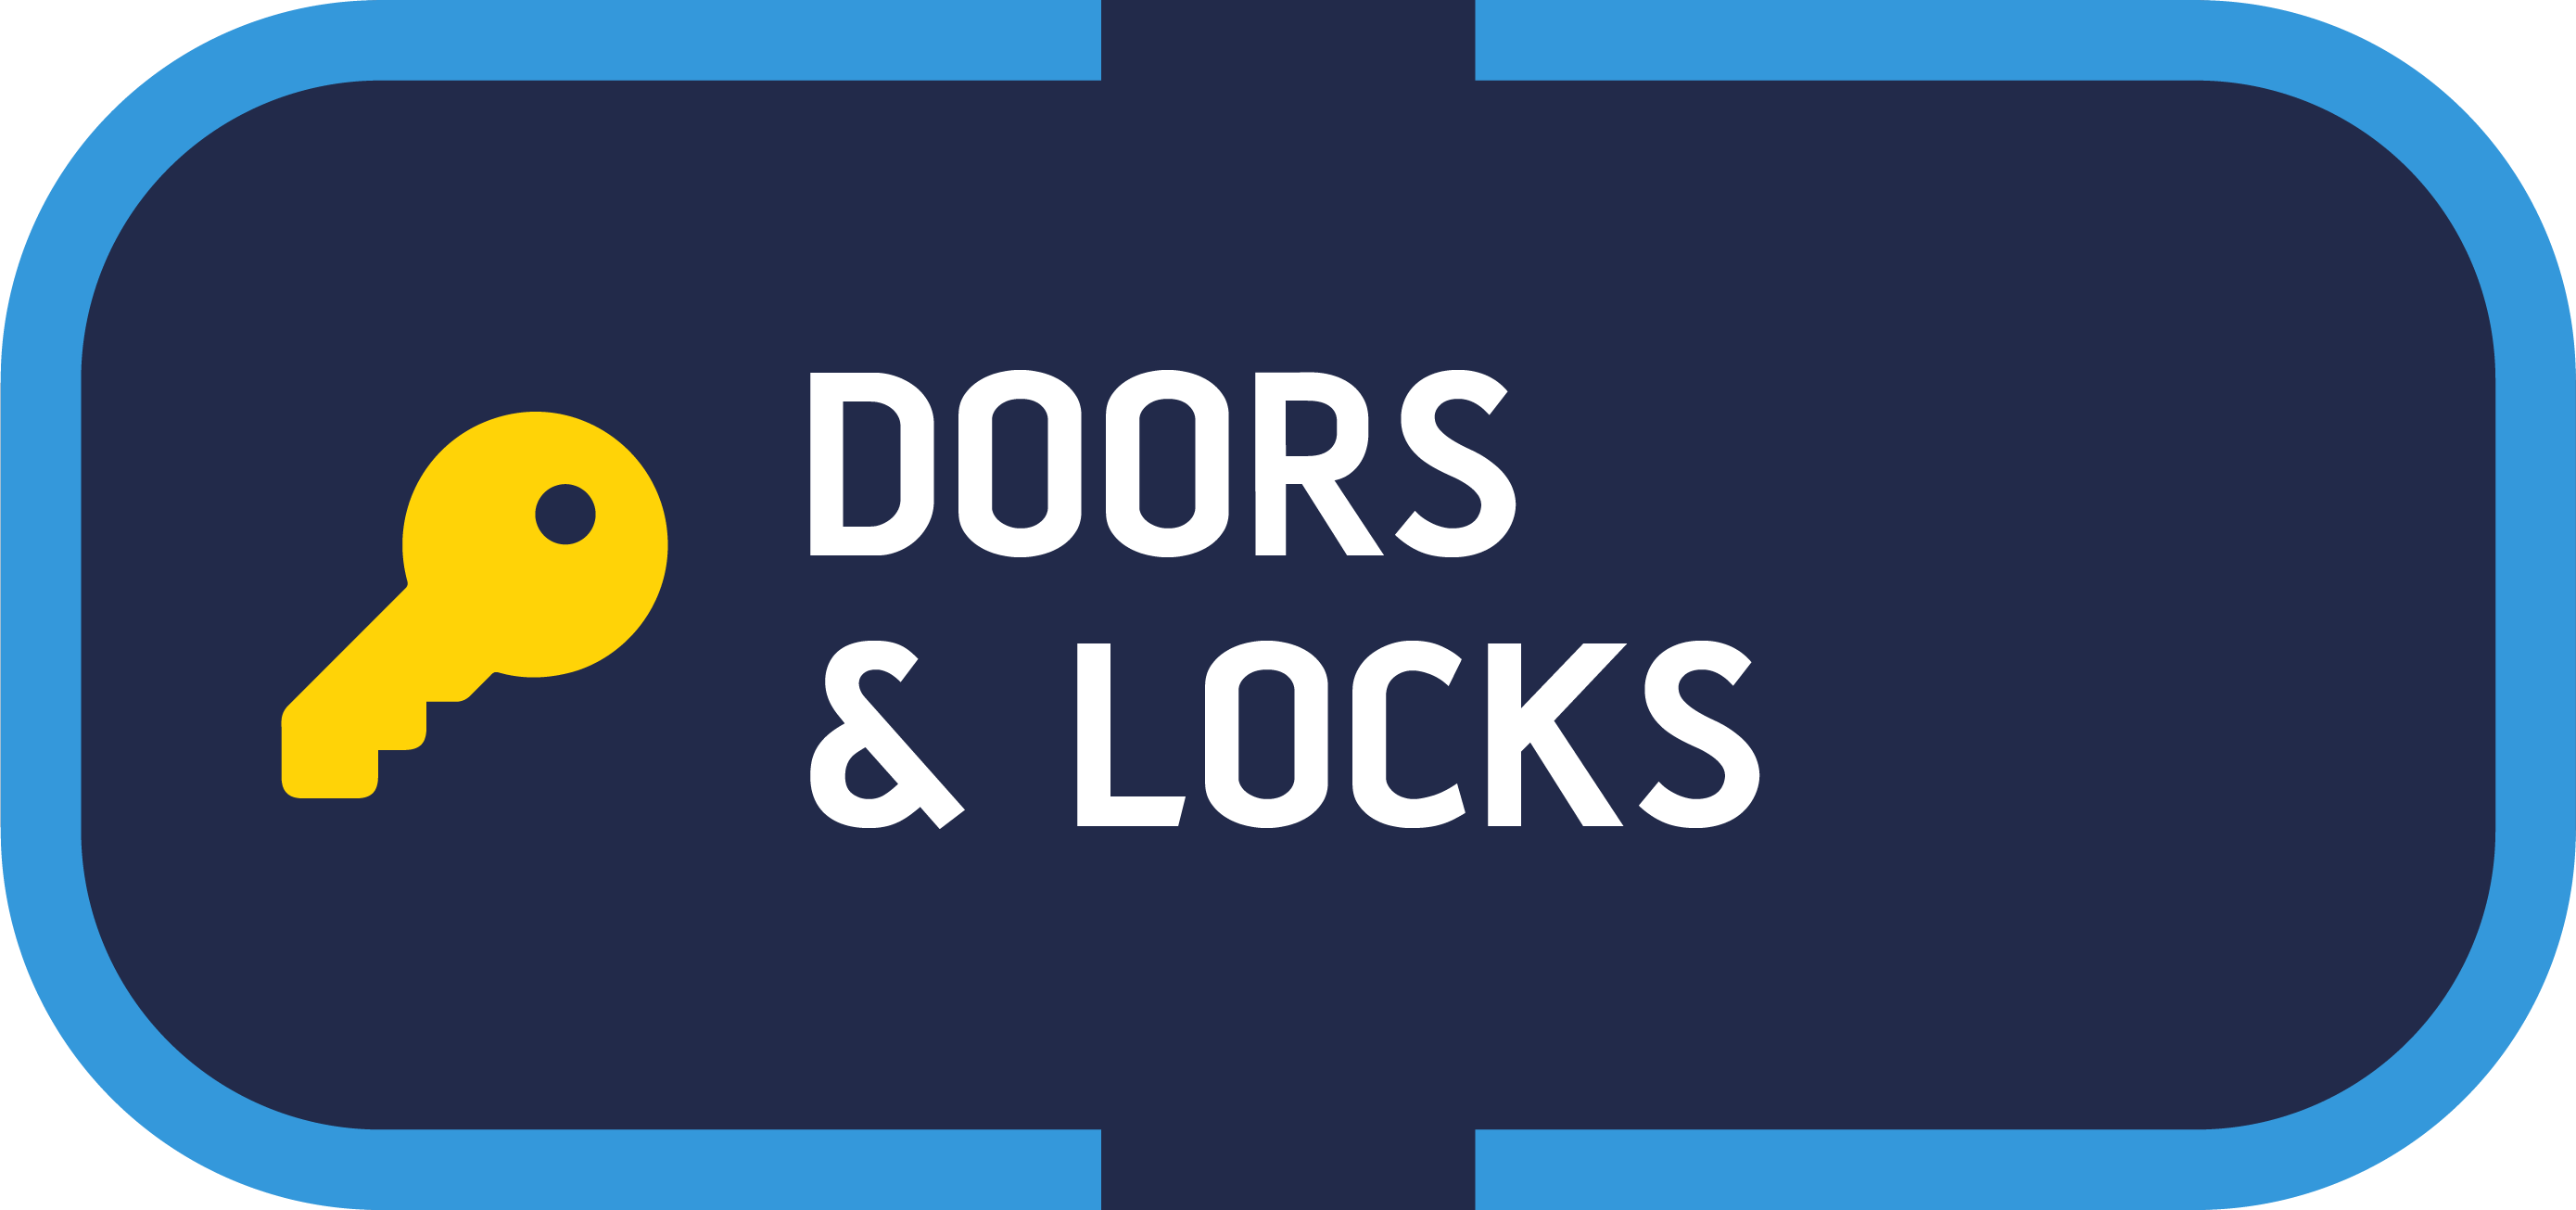 Locks and Doors Tiles